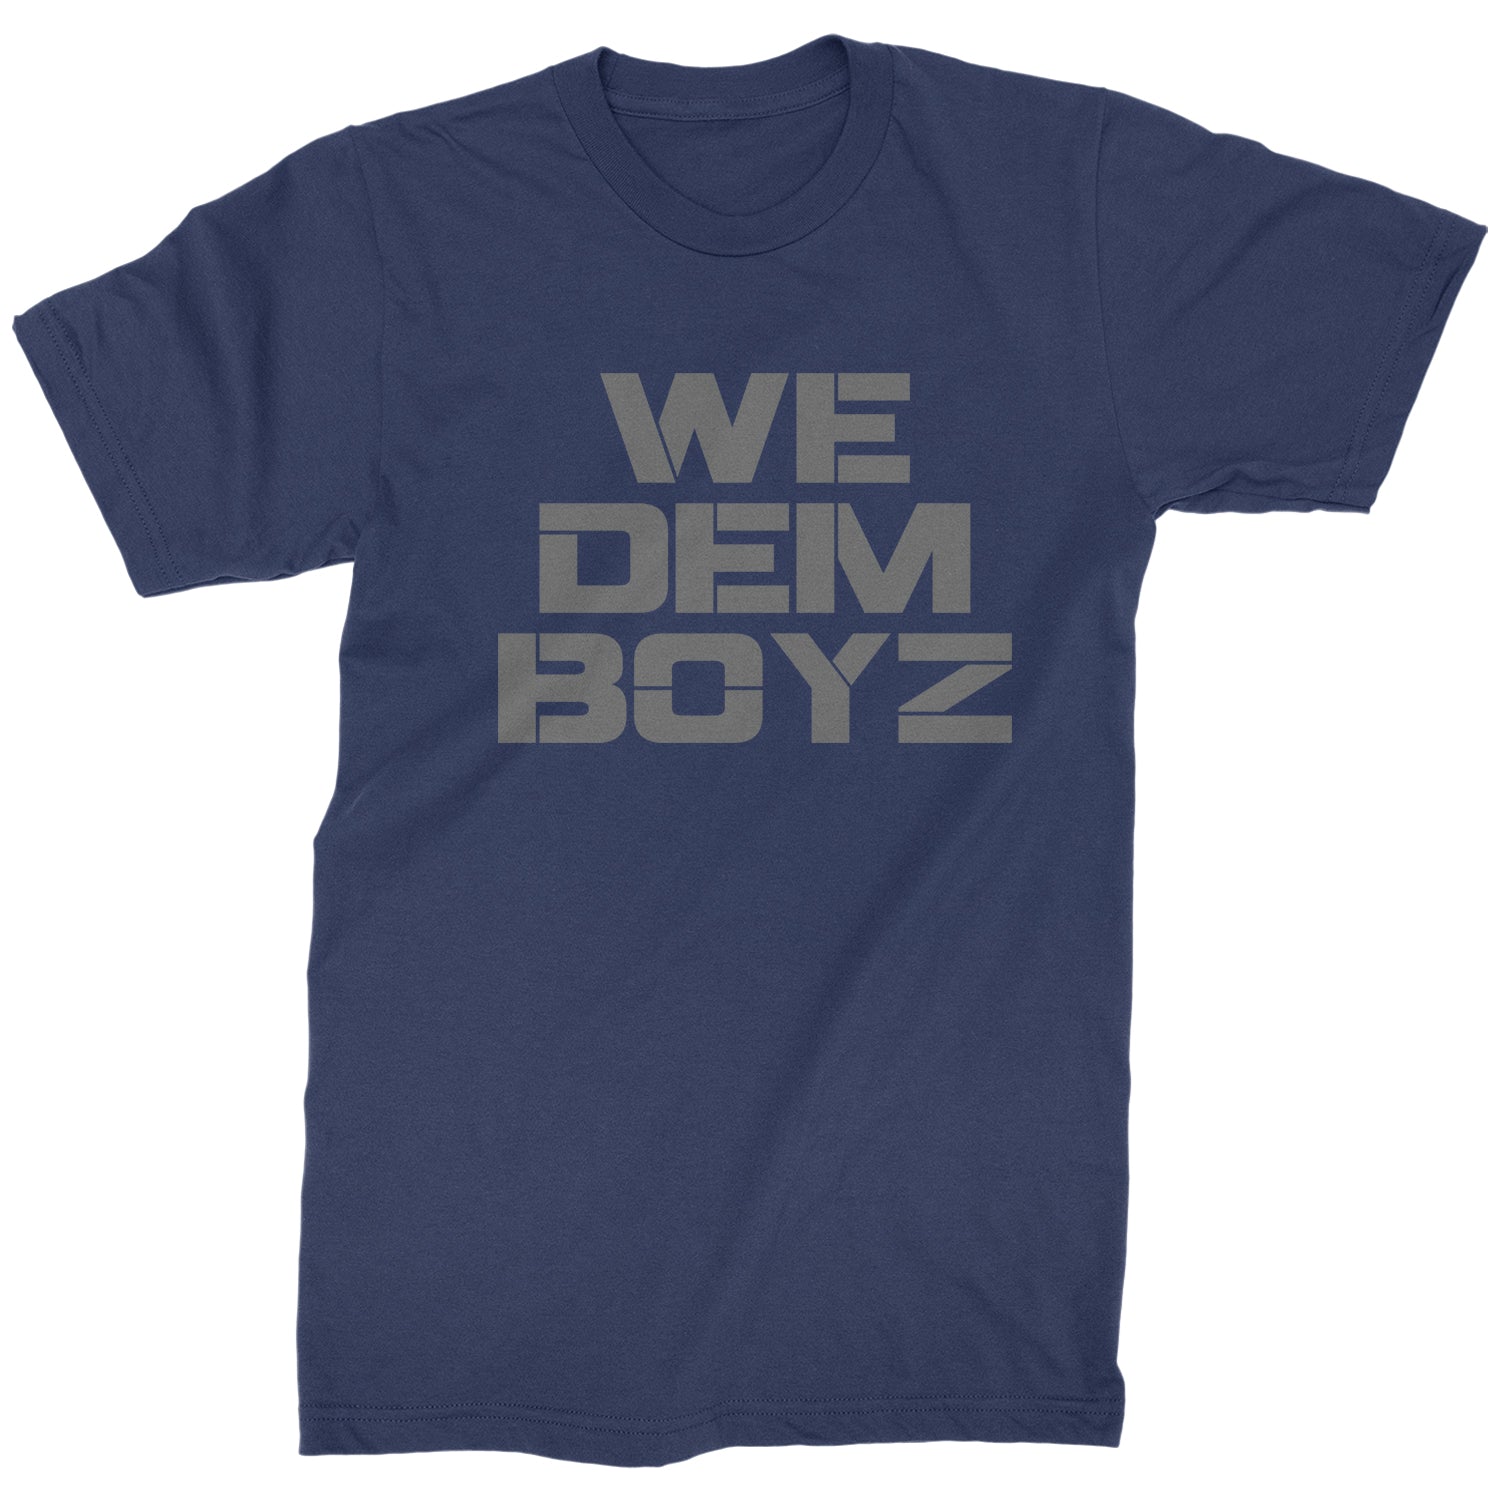 WE Dem Boys Dallas Mens T-shirt dak, dallas, dorsett, elliot, ezekiel, fan, feed, football, jersey, prescott, team, texas, tony, zeke by Expression Tees